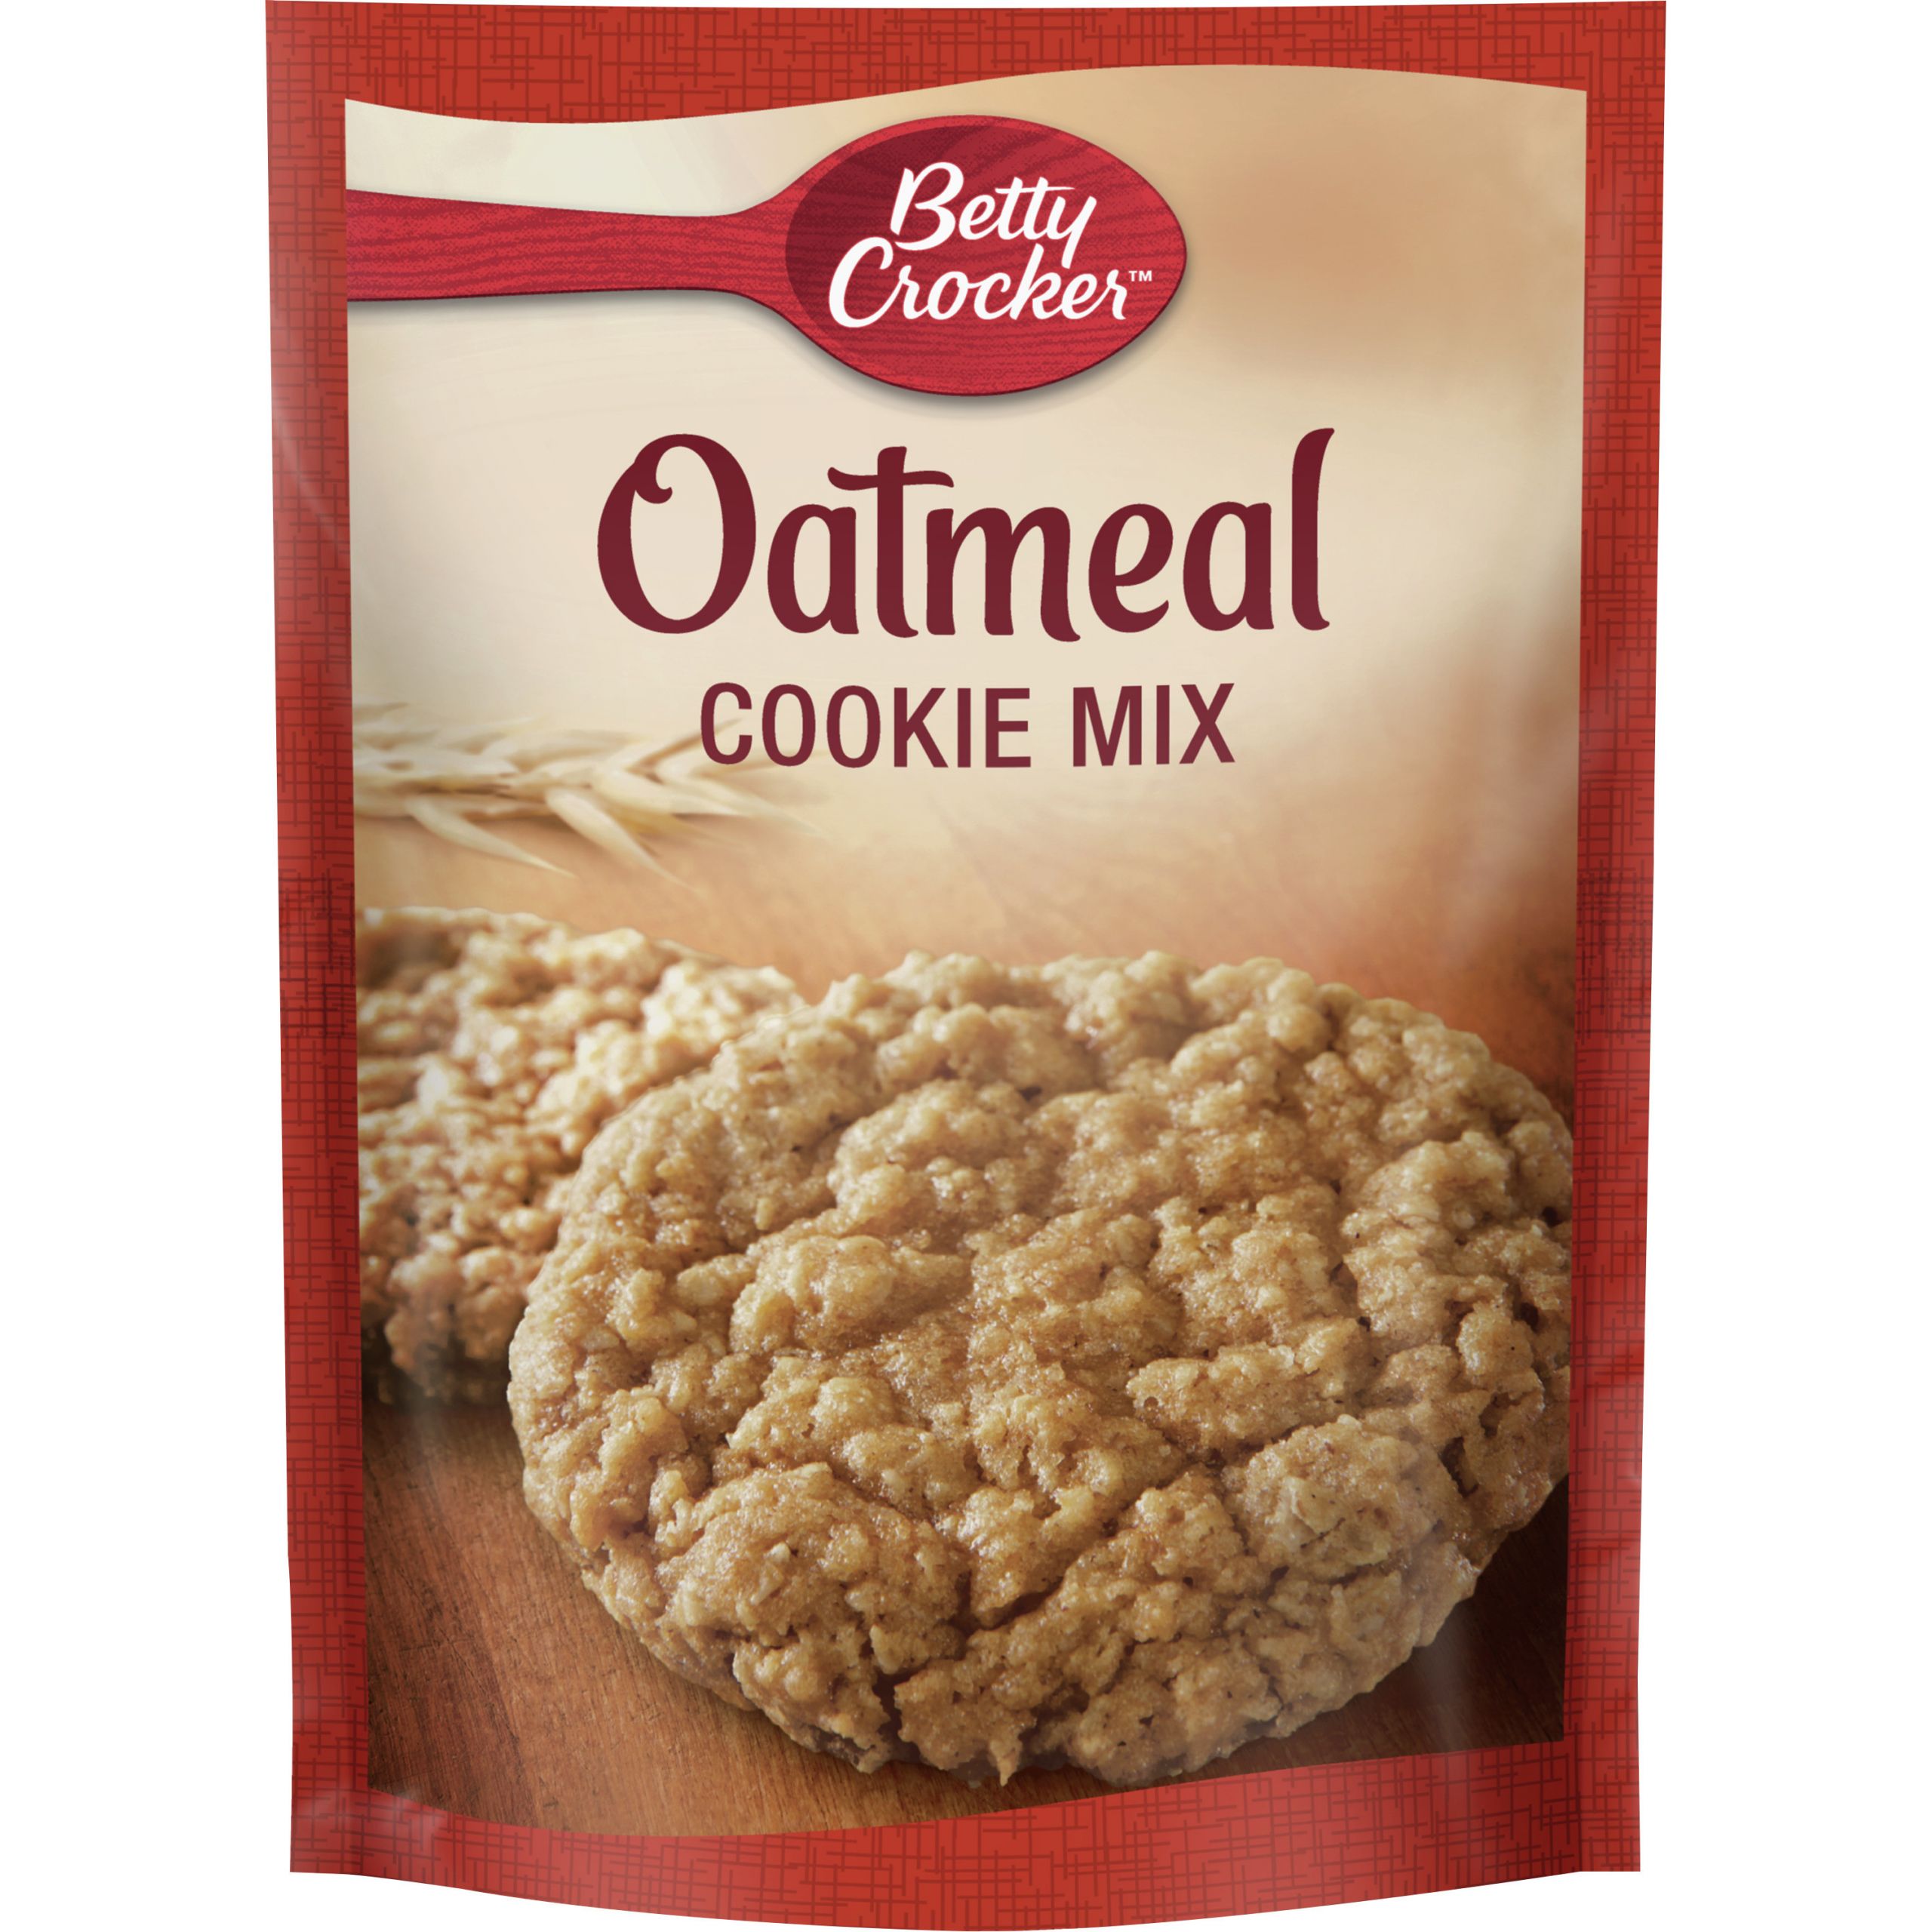 Oatmeal Cookies Mix Lovely Betty Crocker Baking Mix Oatmeal Cookie Mix 17 5 Oz